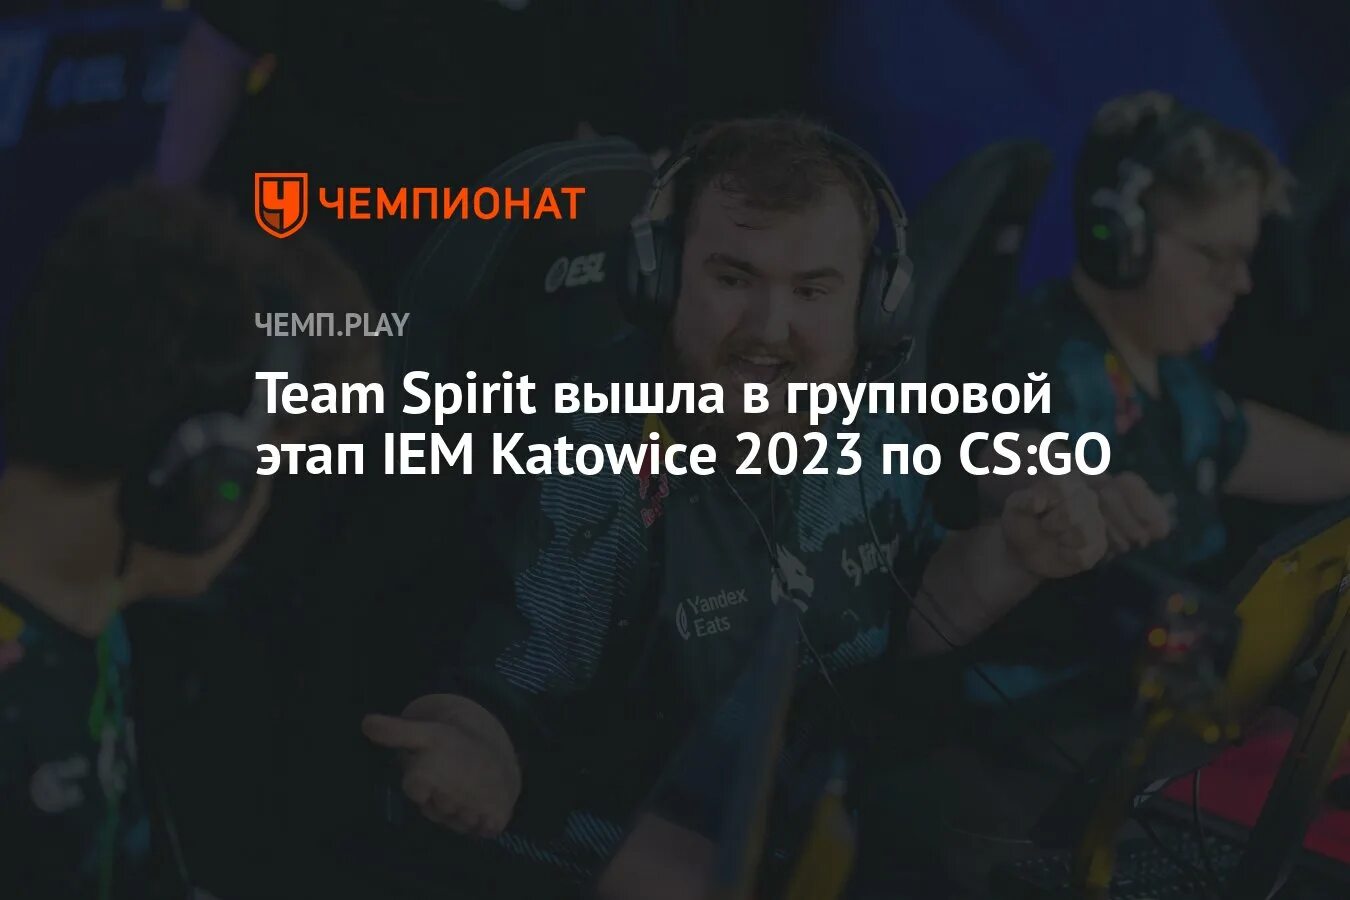 Team spirit iem katowice. Катовица 2023. Intel extreme Masters Katowice 2023. Спирит 2020 КС. Команда спирит в КС го 2023.